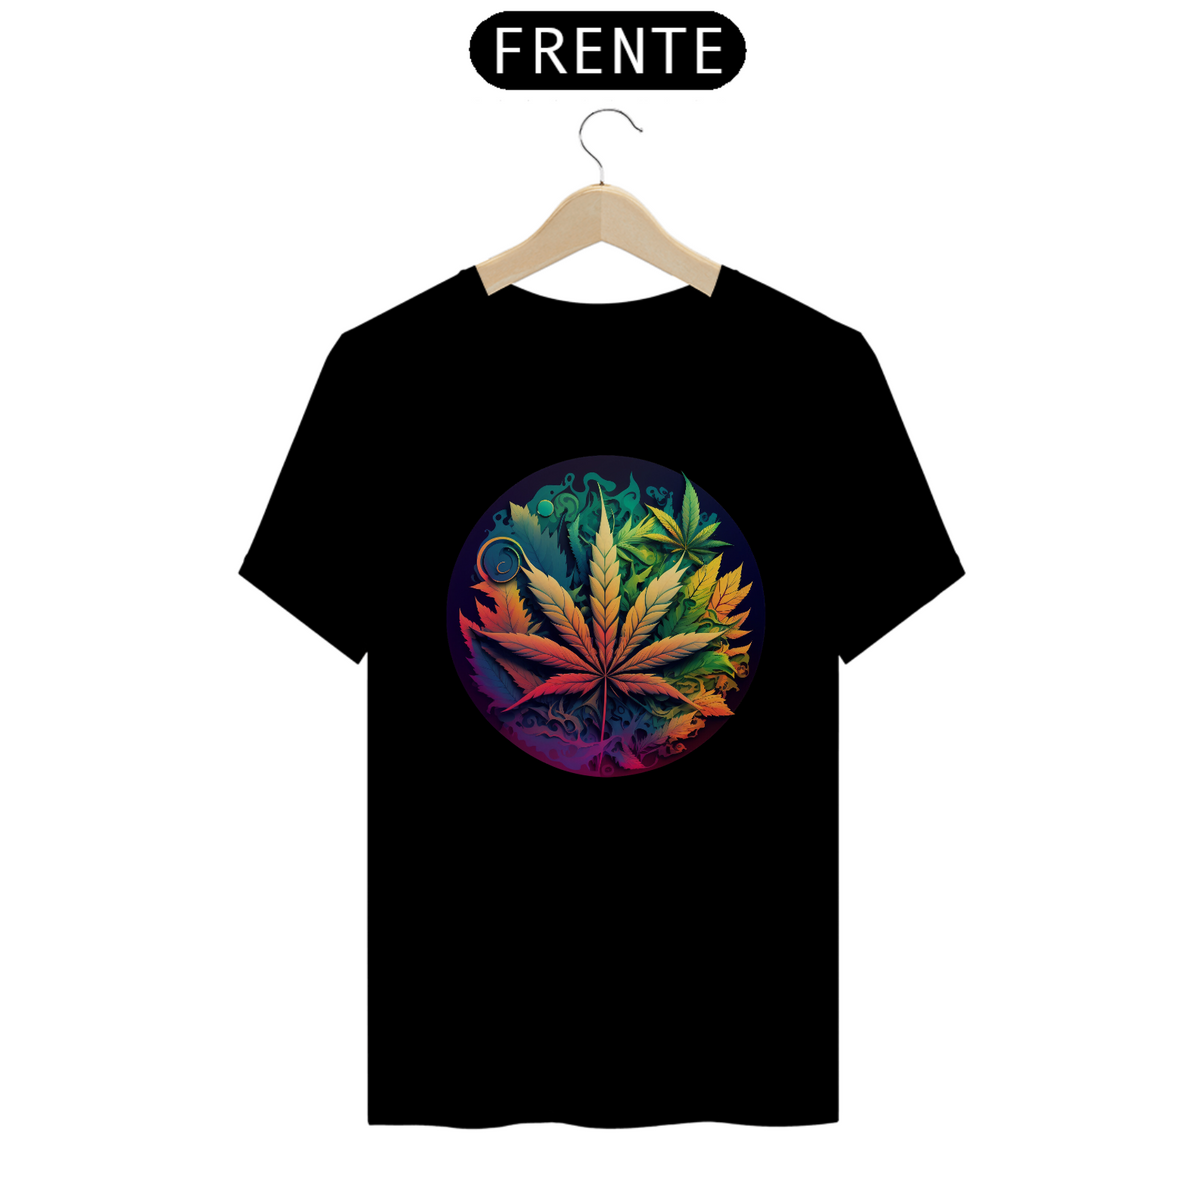 Nome do produto: Camiseta Terra 4:20